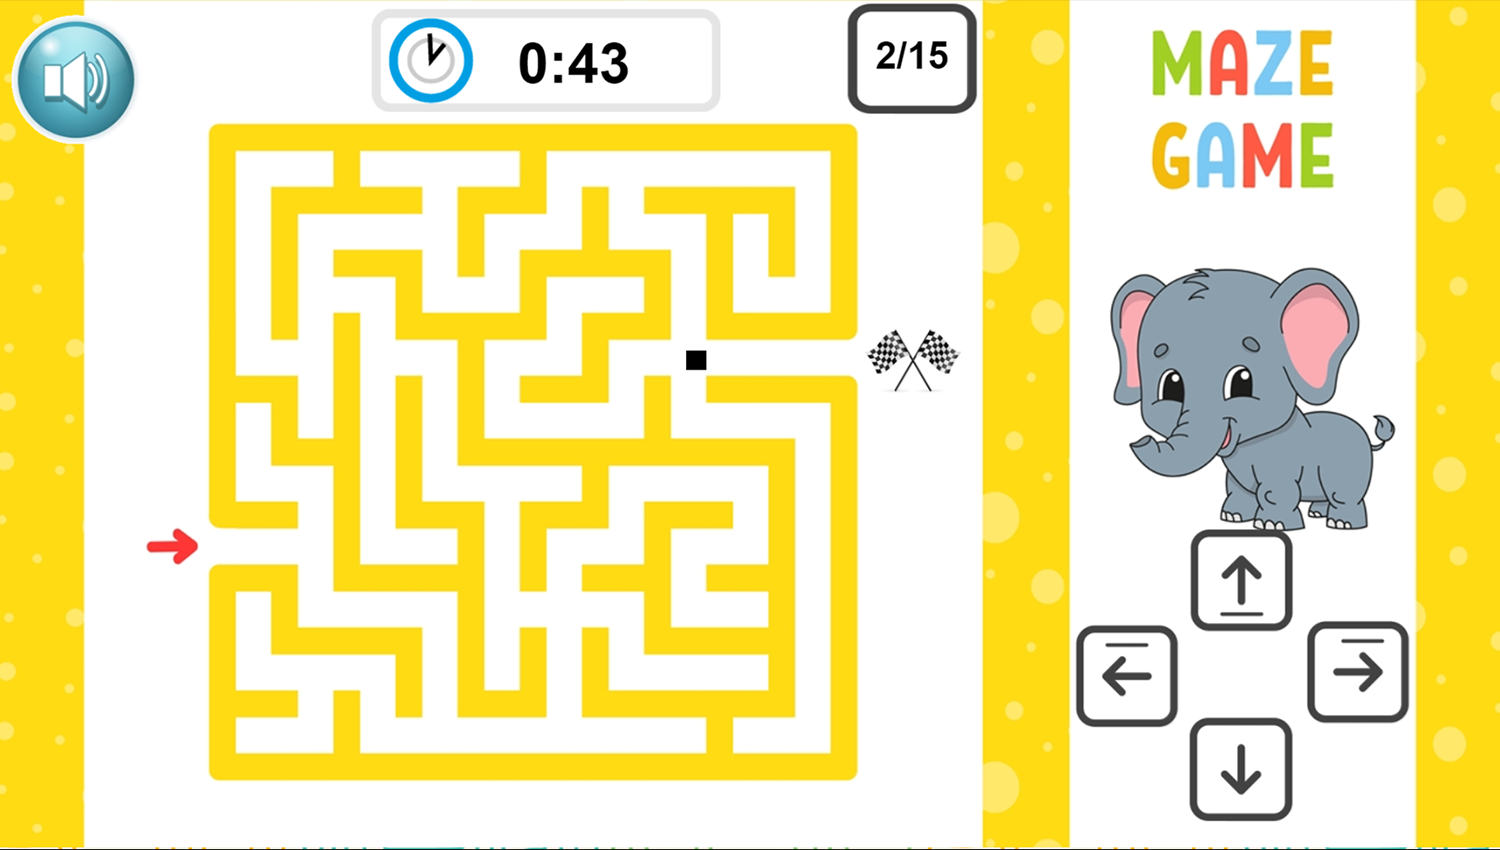 Maze Game Level Select Screenshot.